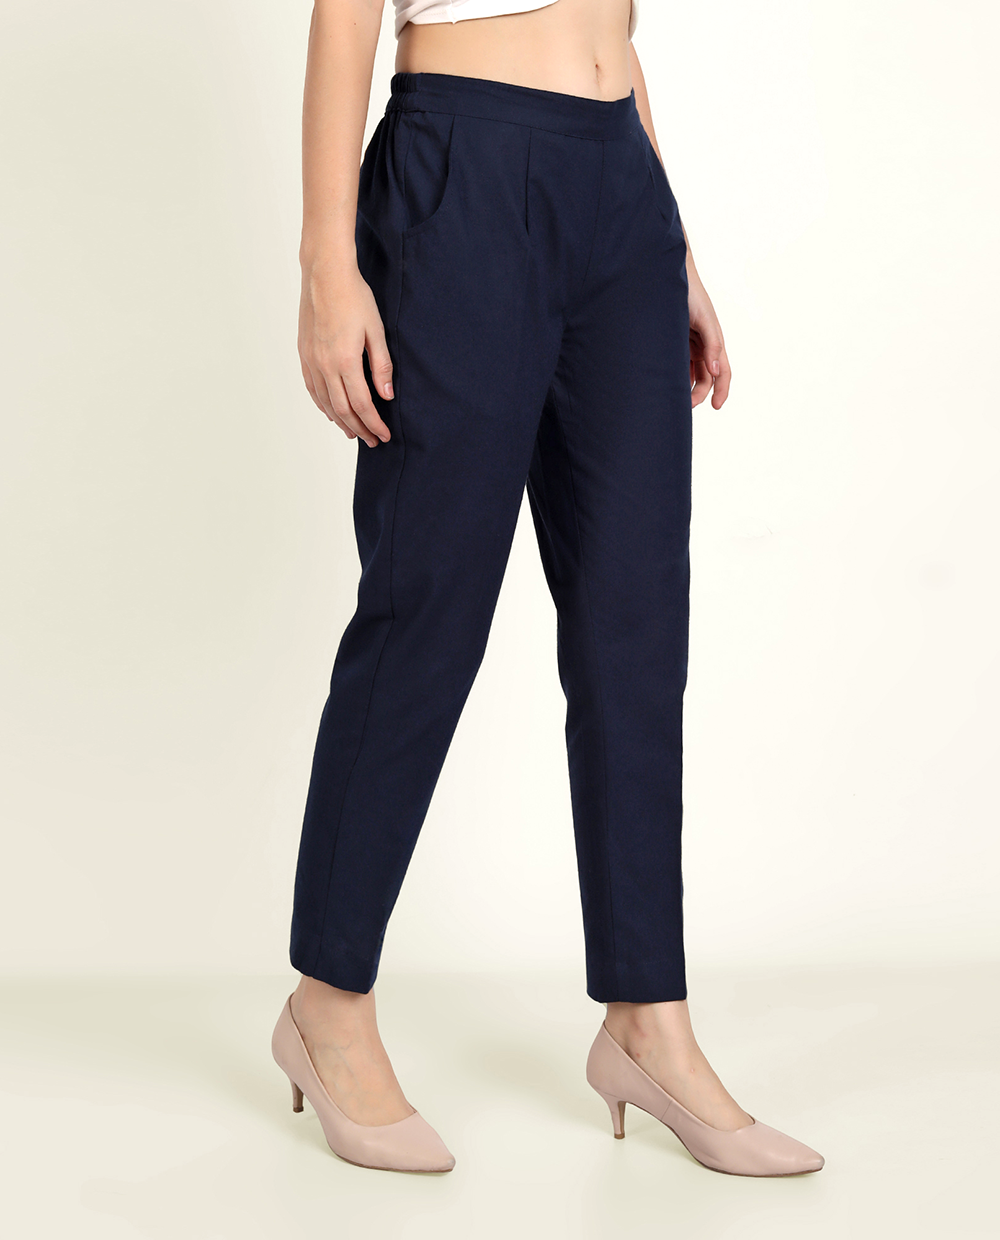 Formal pant navy blue color for women - Women - 1741265952